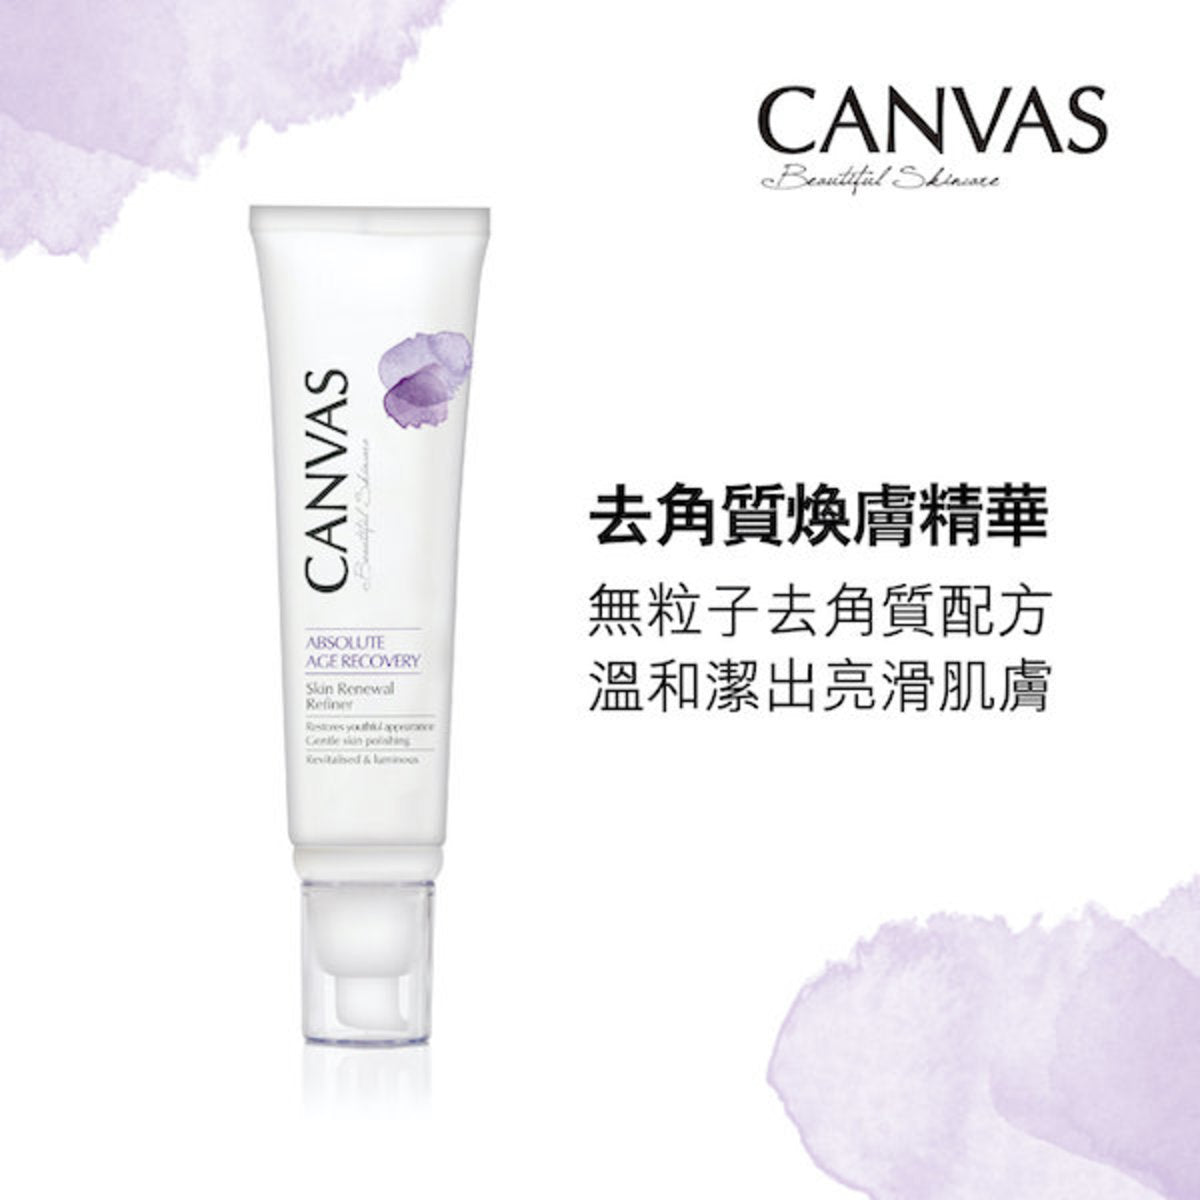 CANVAS Skin Renewal Refiner 100ml - 去角質煥膚精華100ml